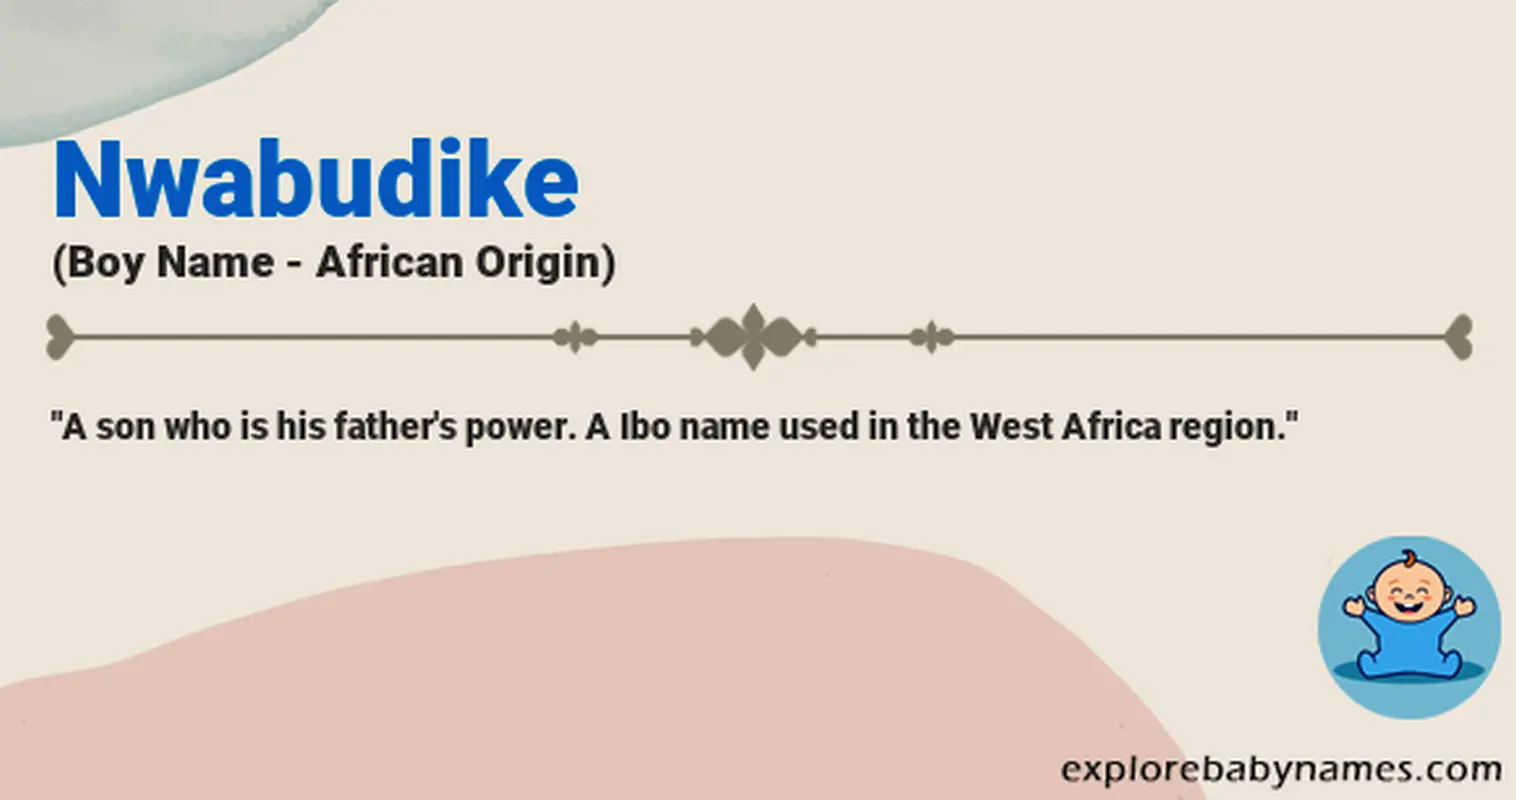 Meaning of Nwabudike